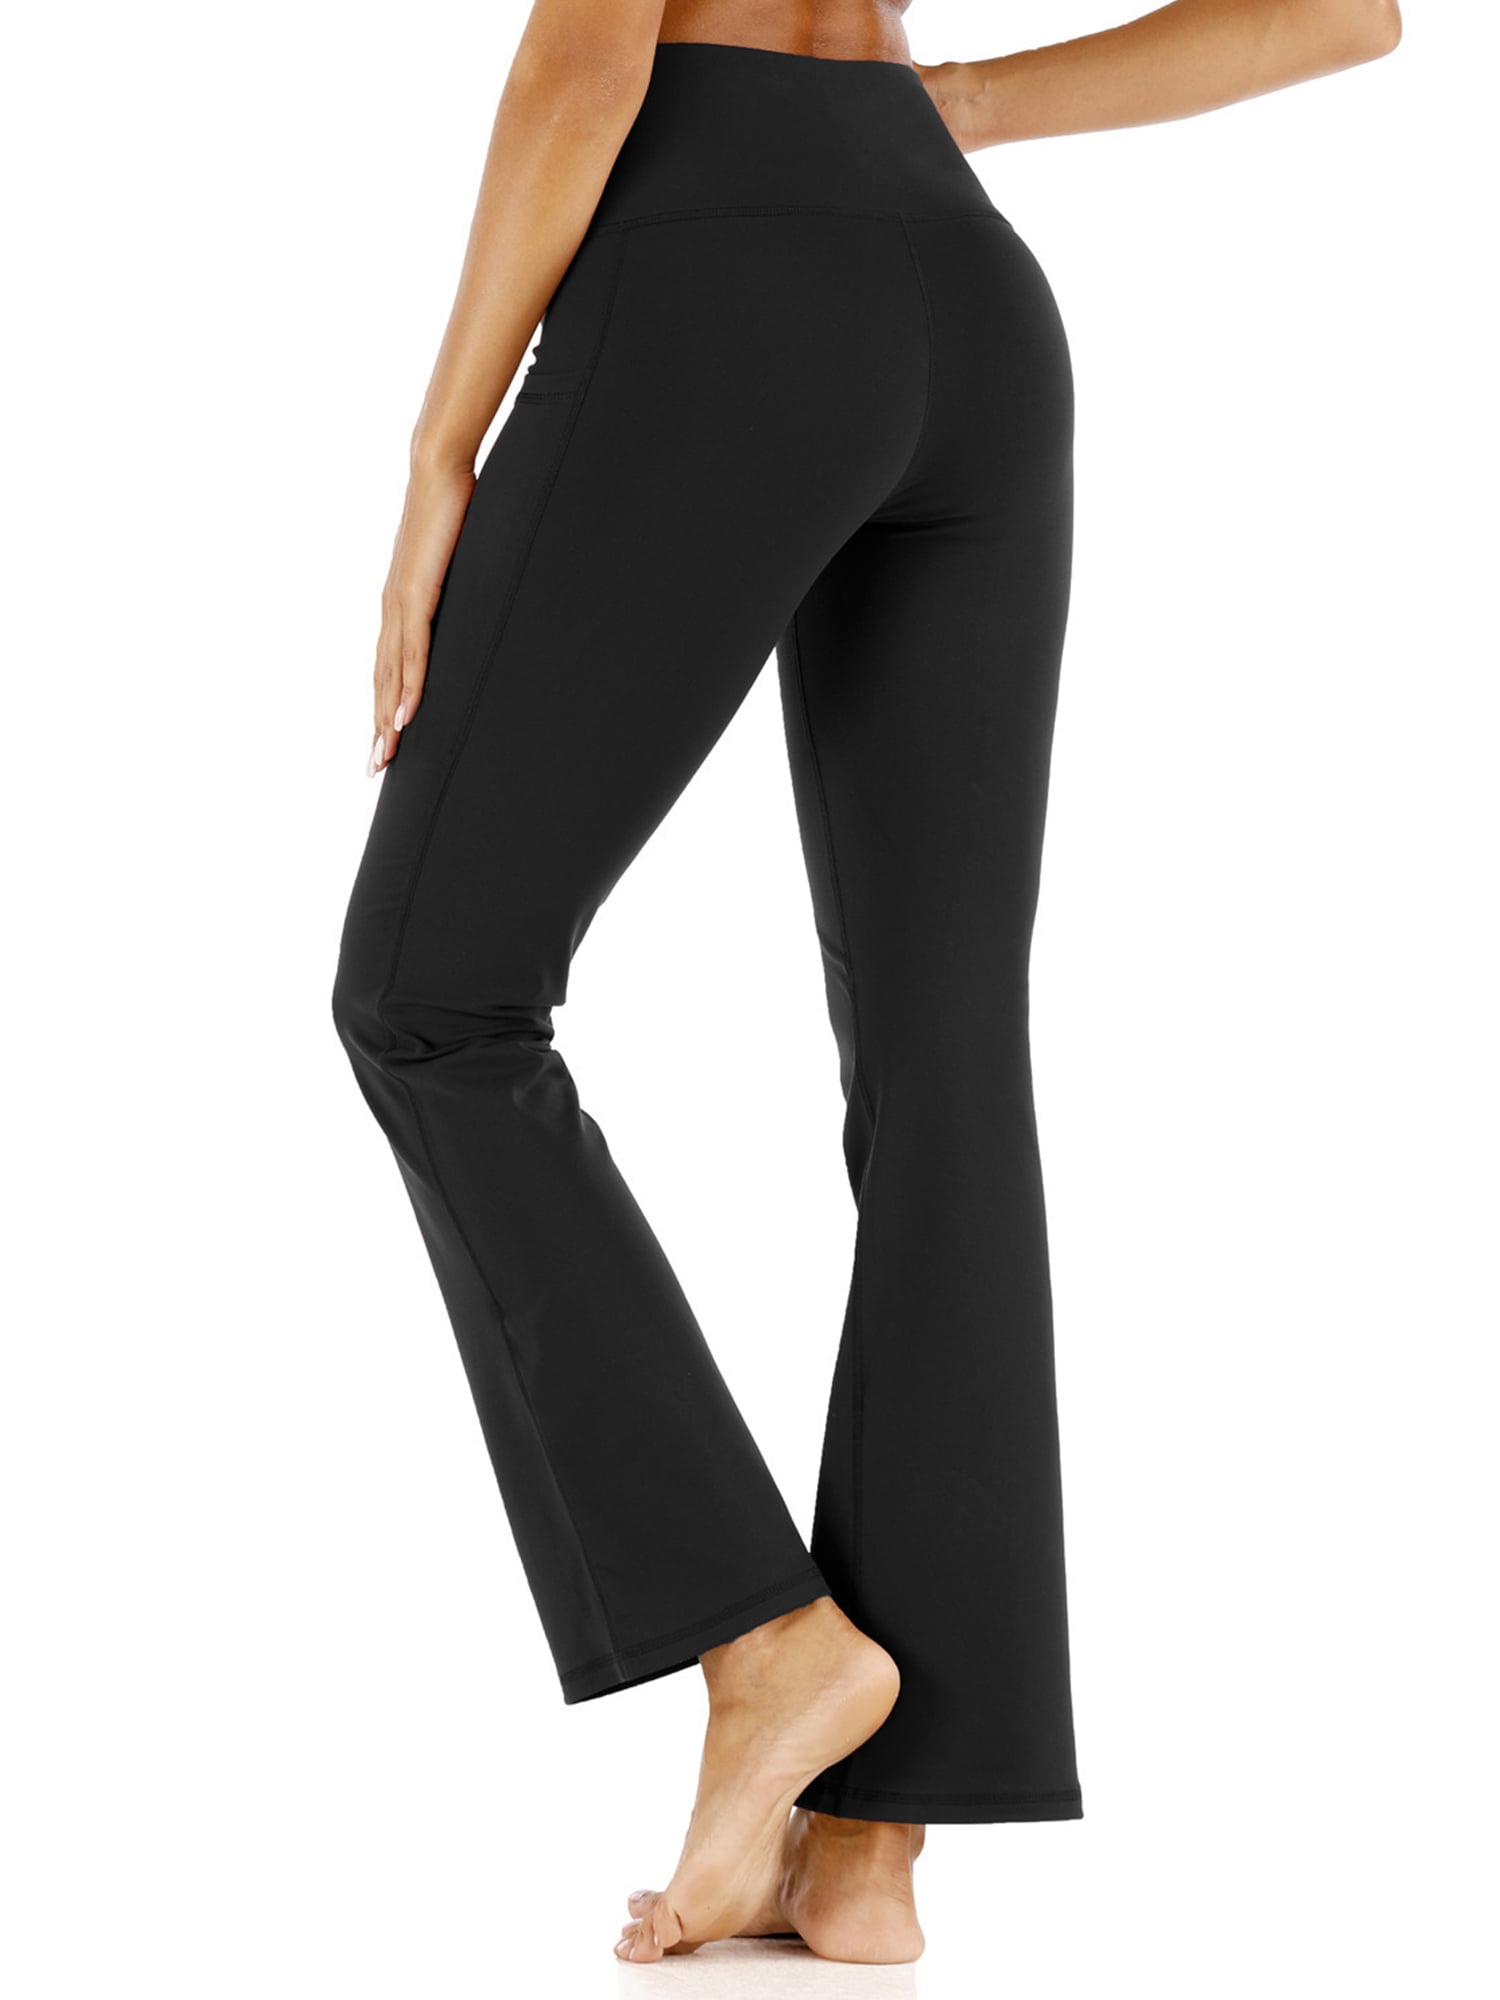 ODODOS Women's Bootcut Yoga Pants Tummy Control Non See Through Bootleg Gym Workout Pants 